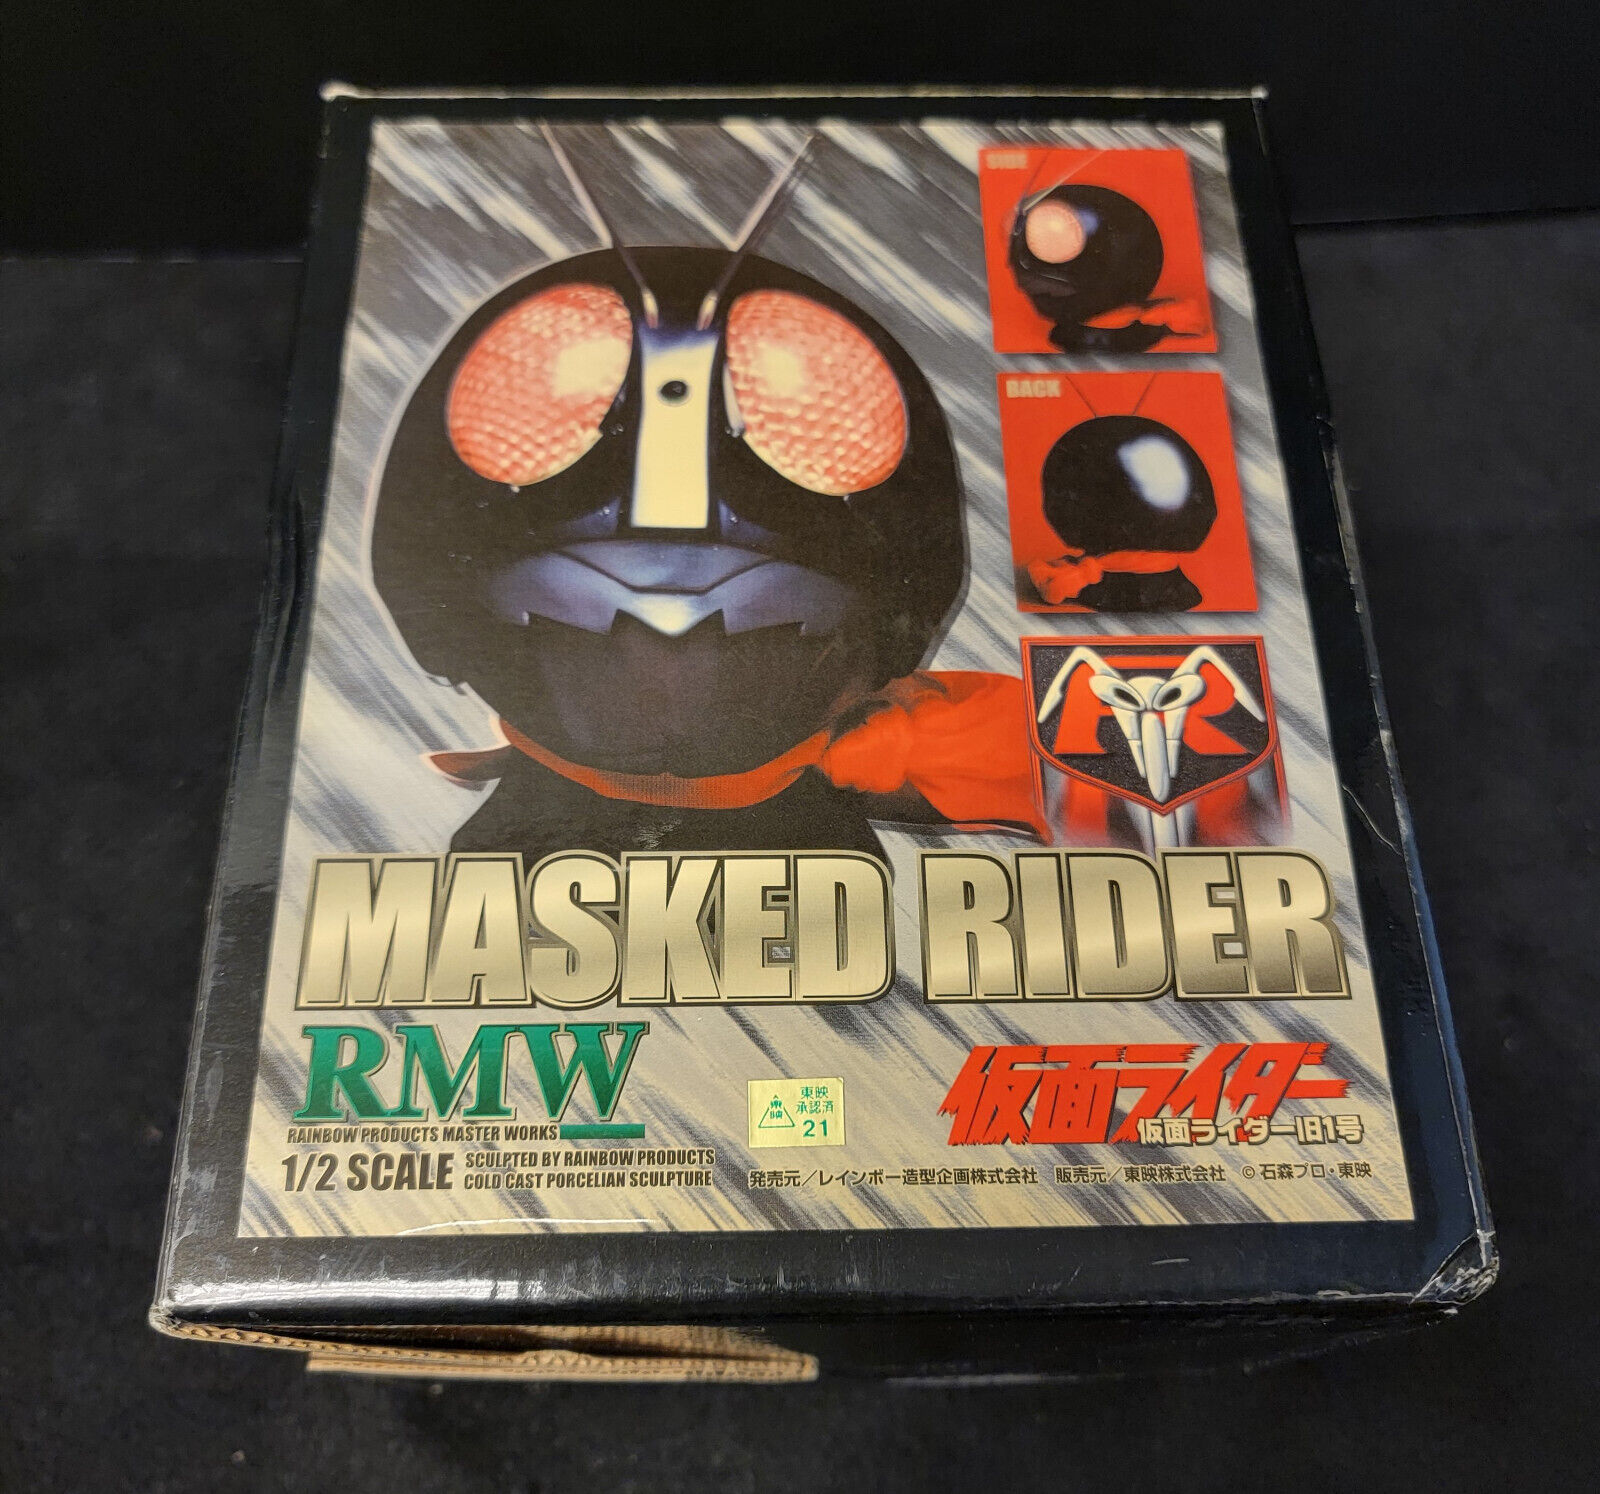 Masked Rider Head Bust (1/2 Scale) - RMW001